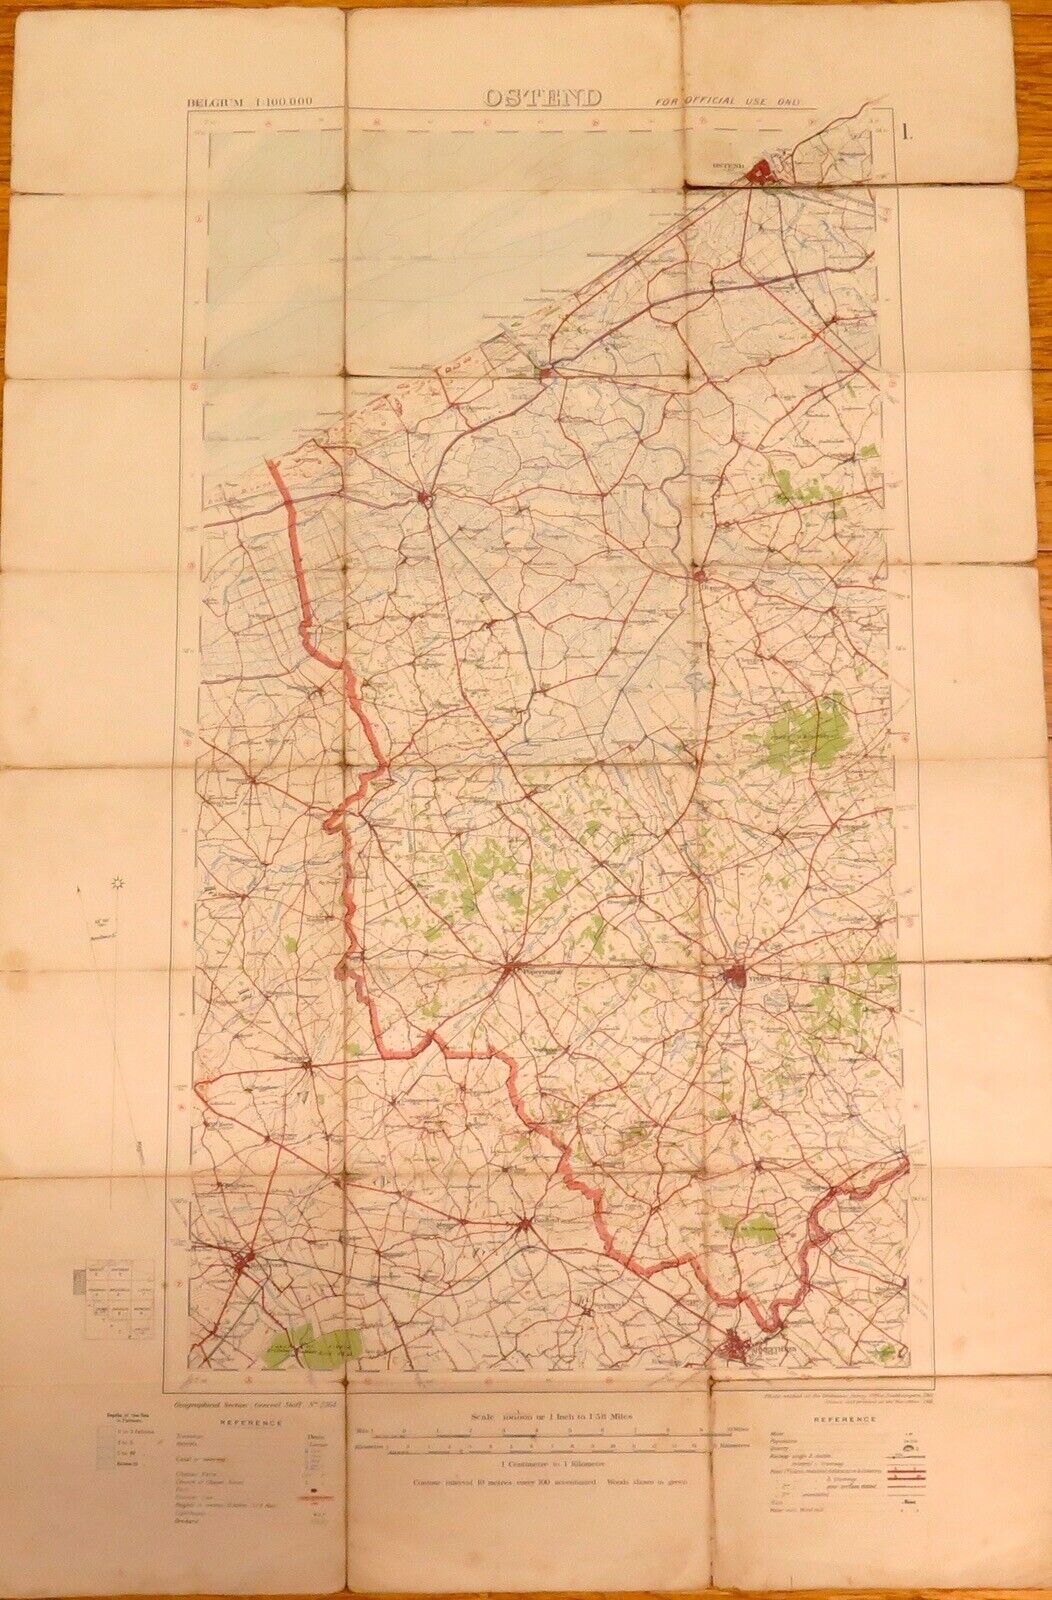 Scarce 1911 British Map Used During WW1 Ostend, Belgium.